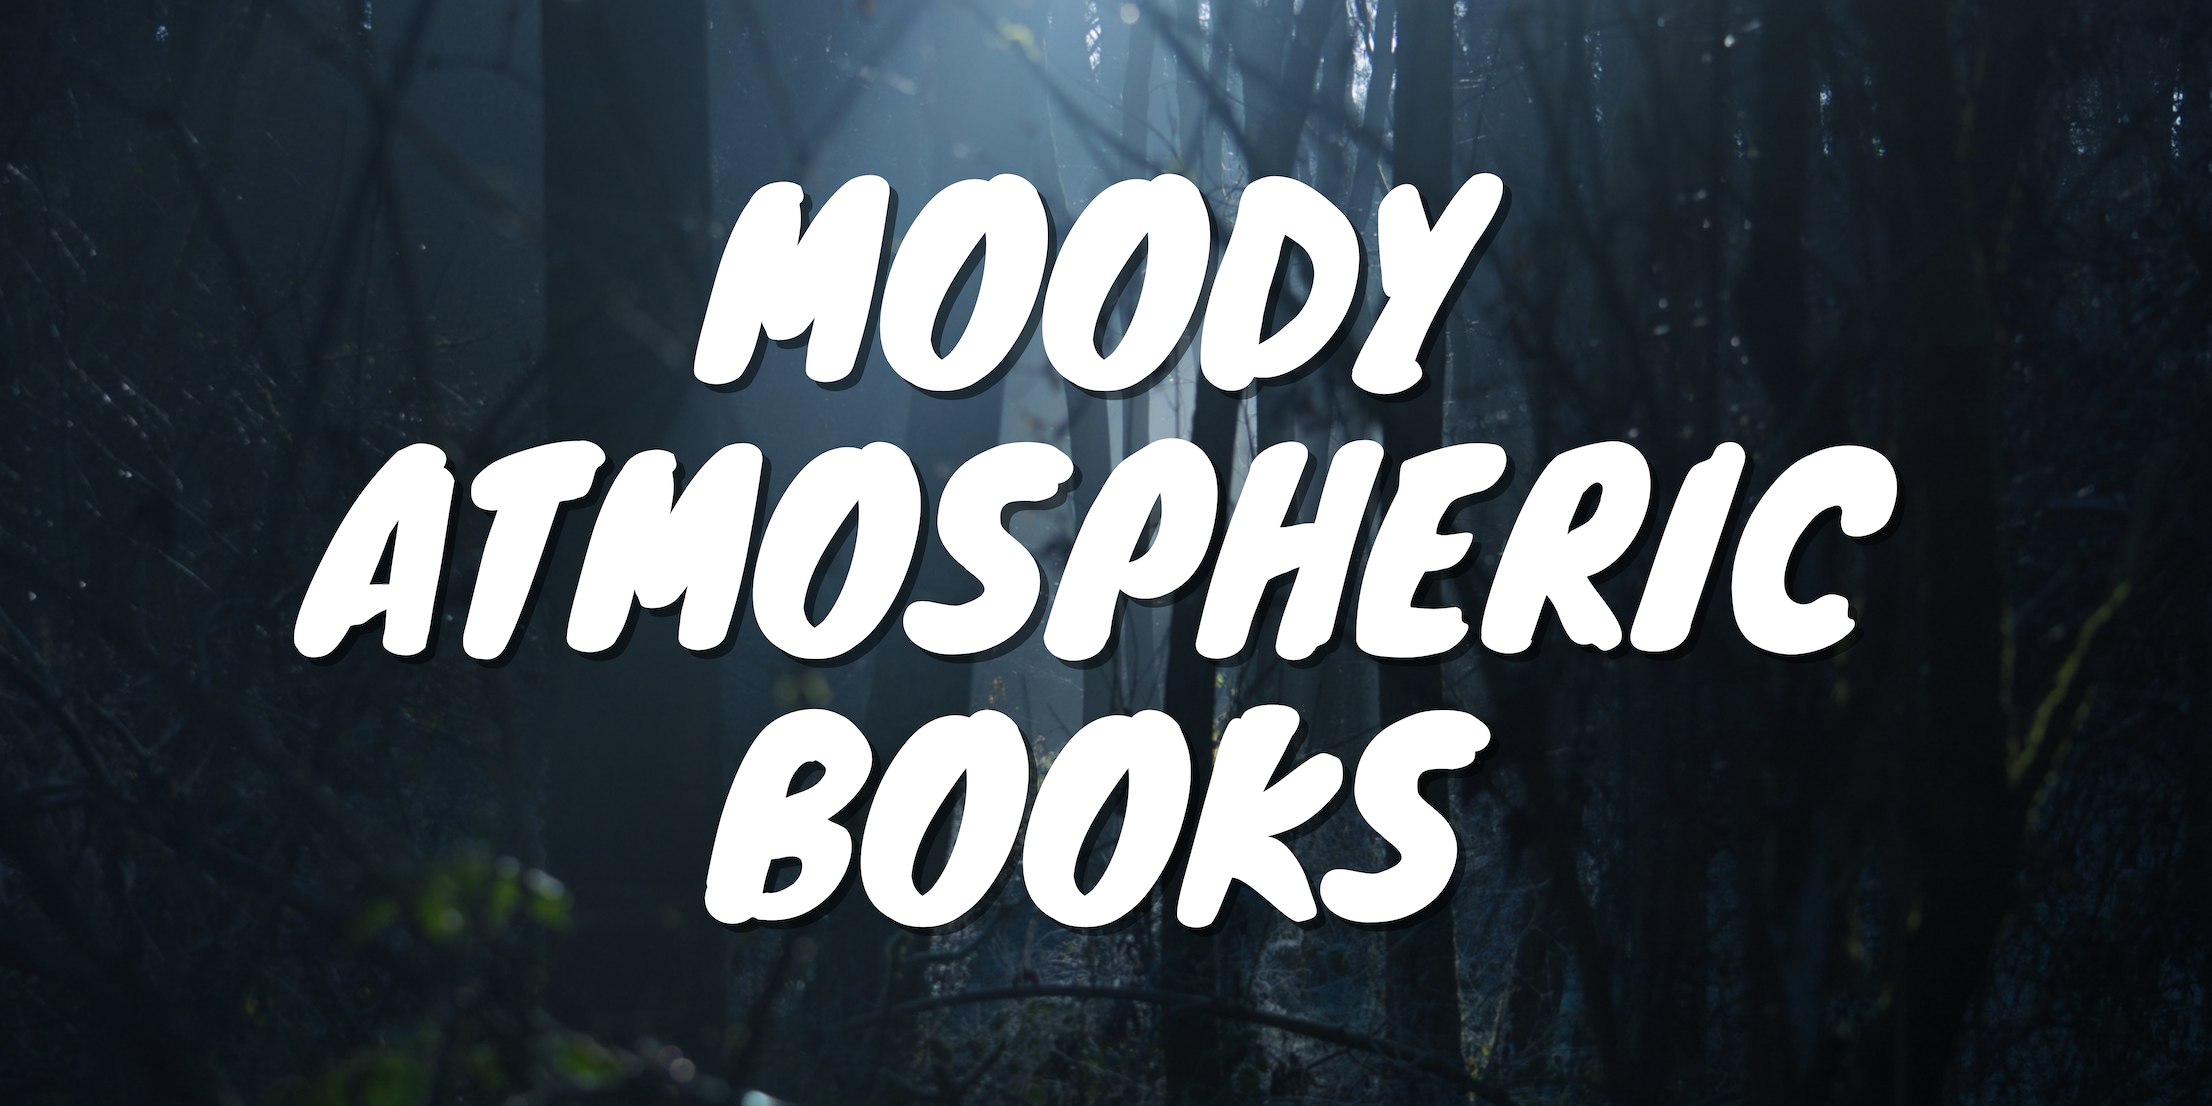 Mroody atmospheric books